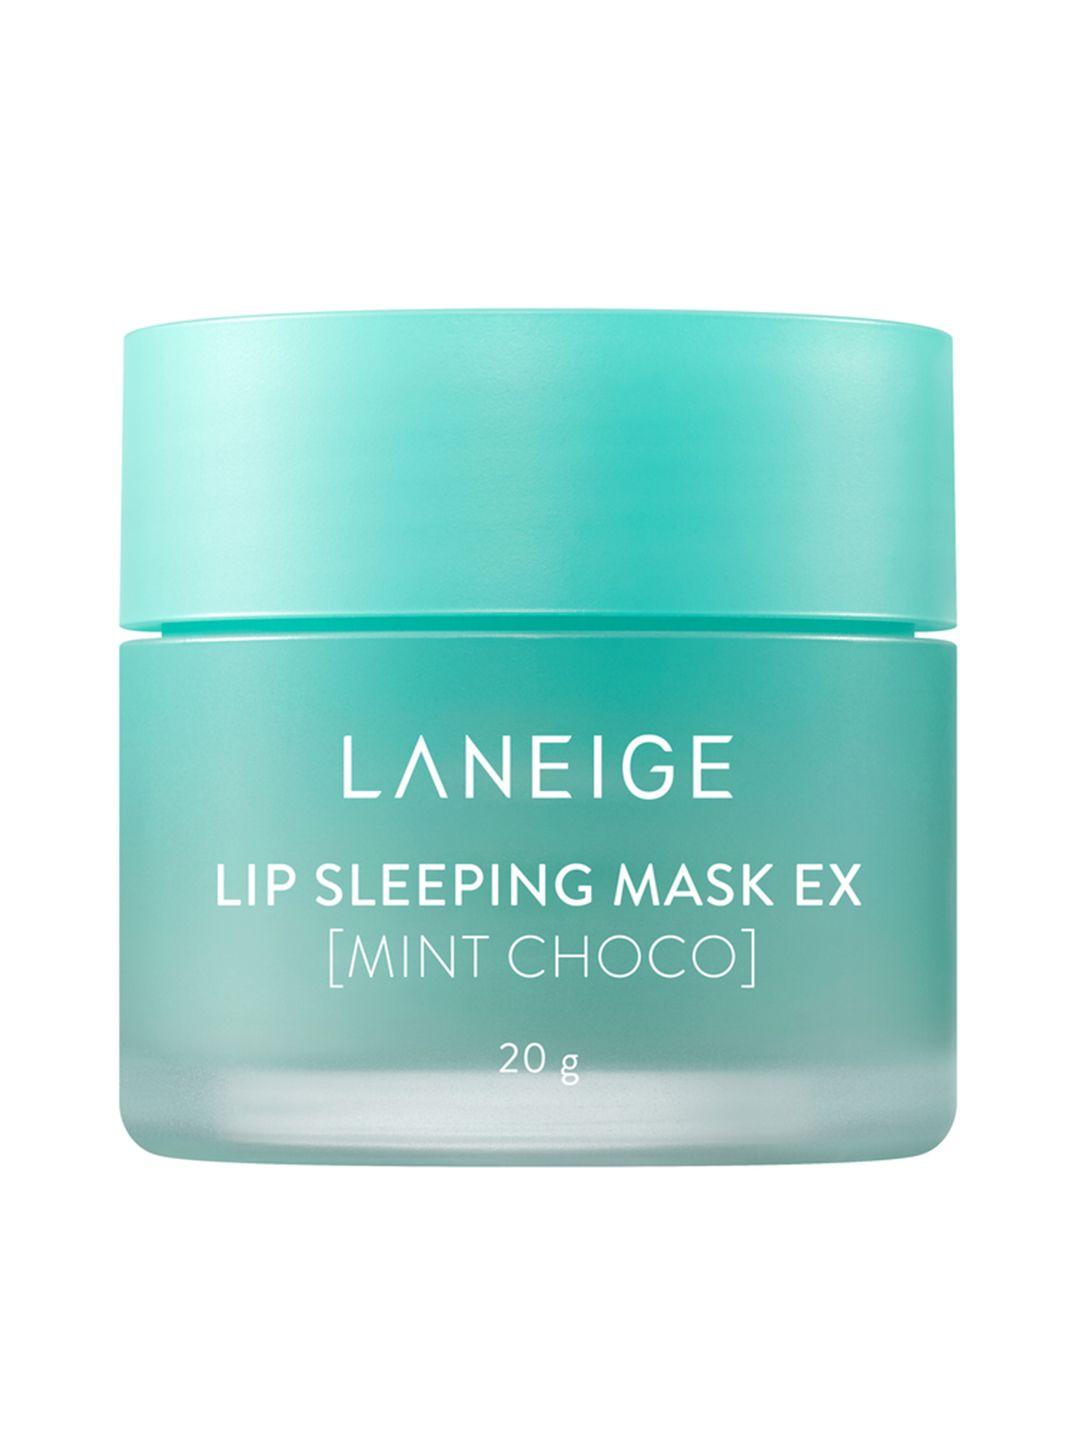 laneige dermatologist tested mint choco lip sleeping mask ex for 8 hour hydration - 20 g